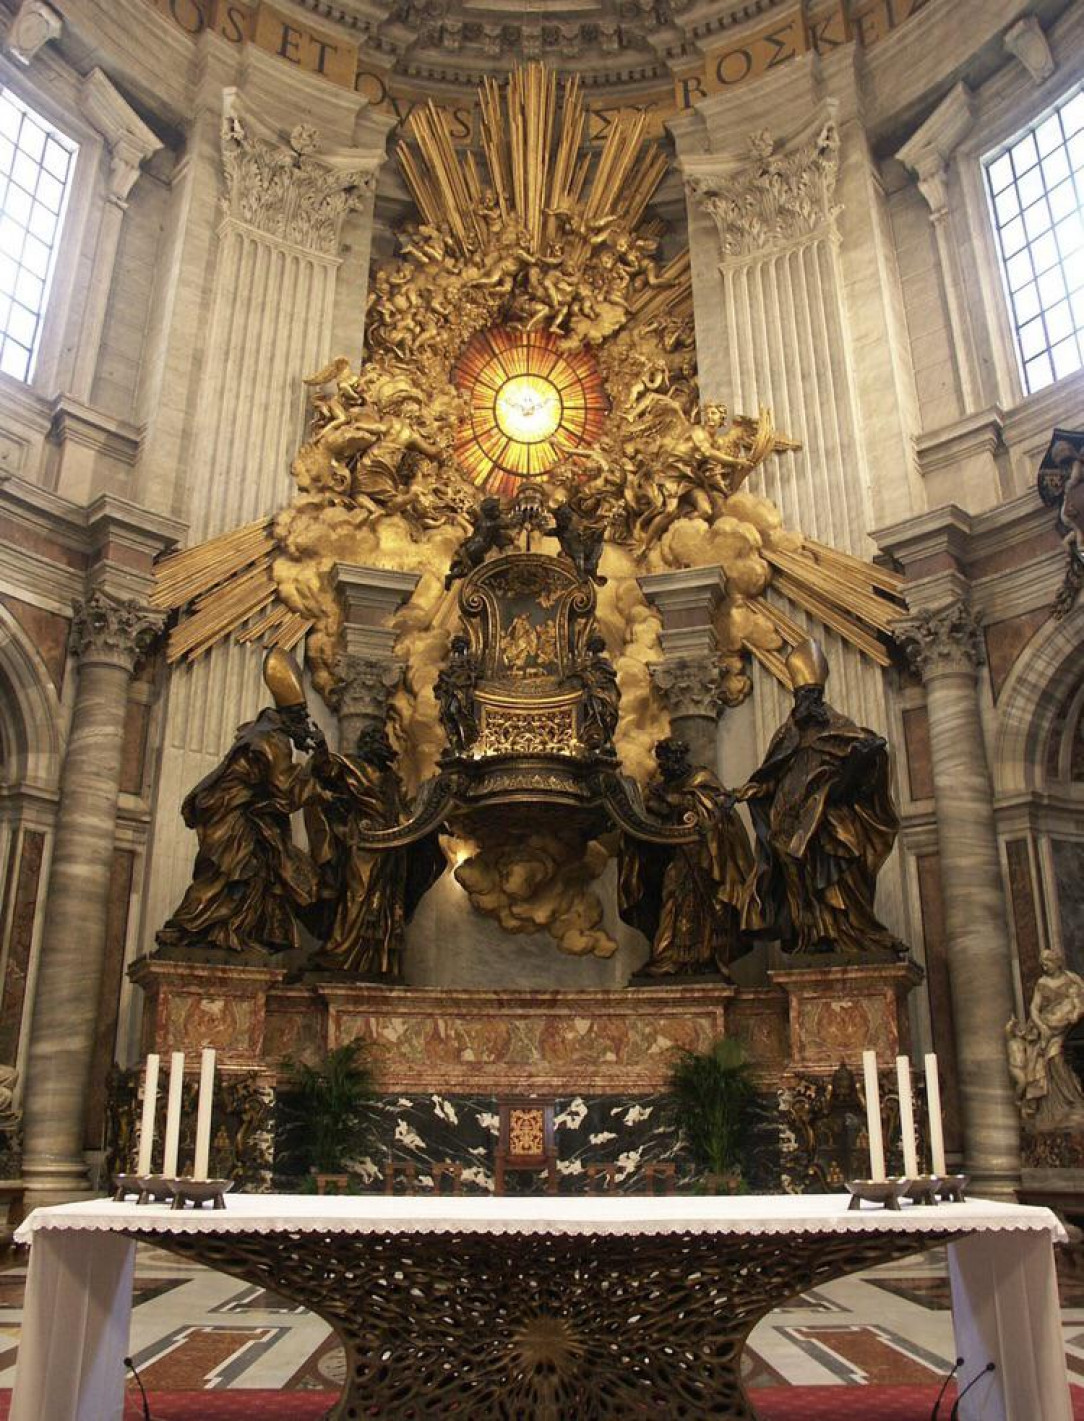 Throne of Saint Peter